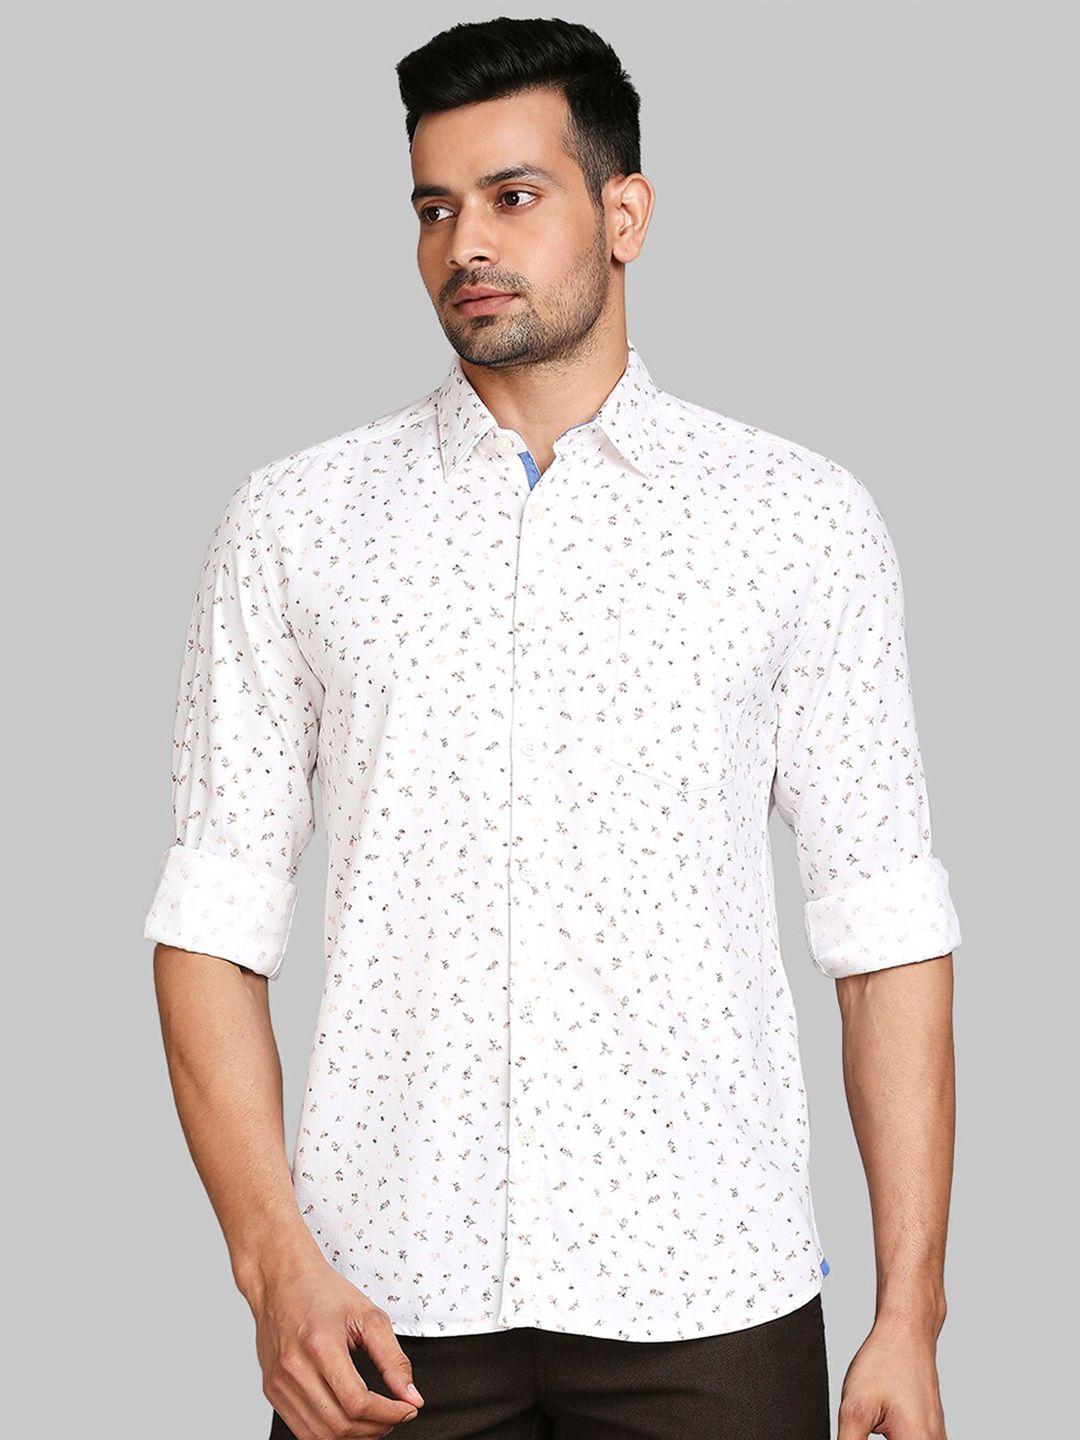 parx-men-white-slim-fit-printed-casual-shirt